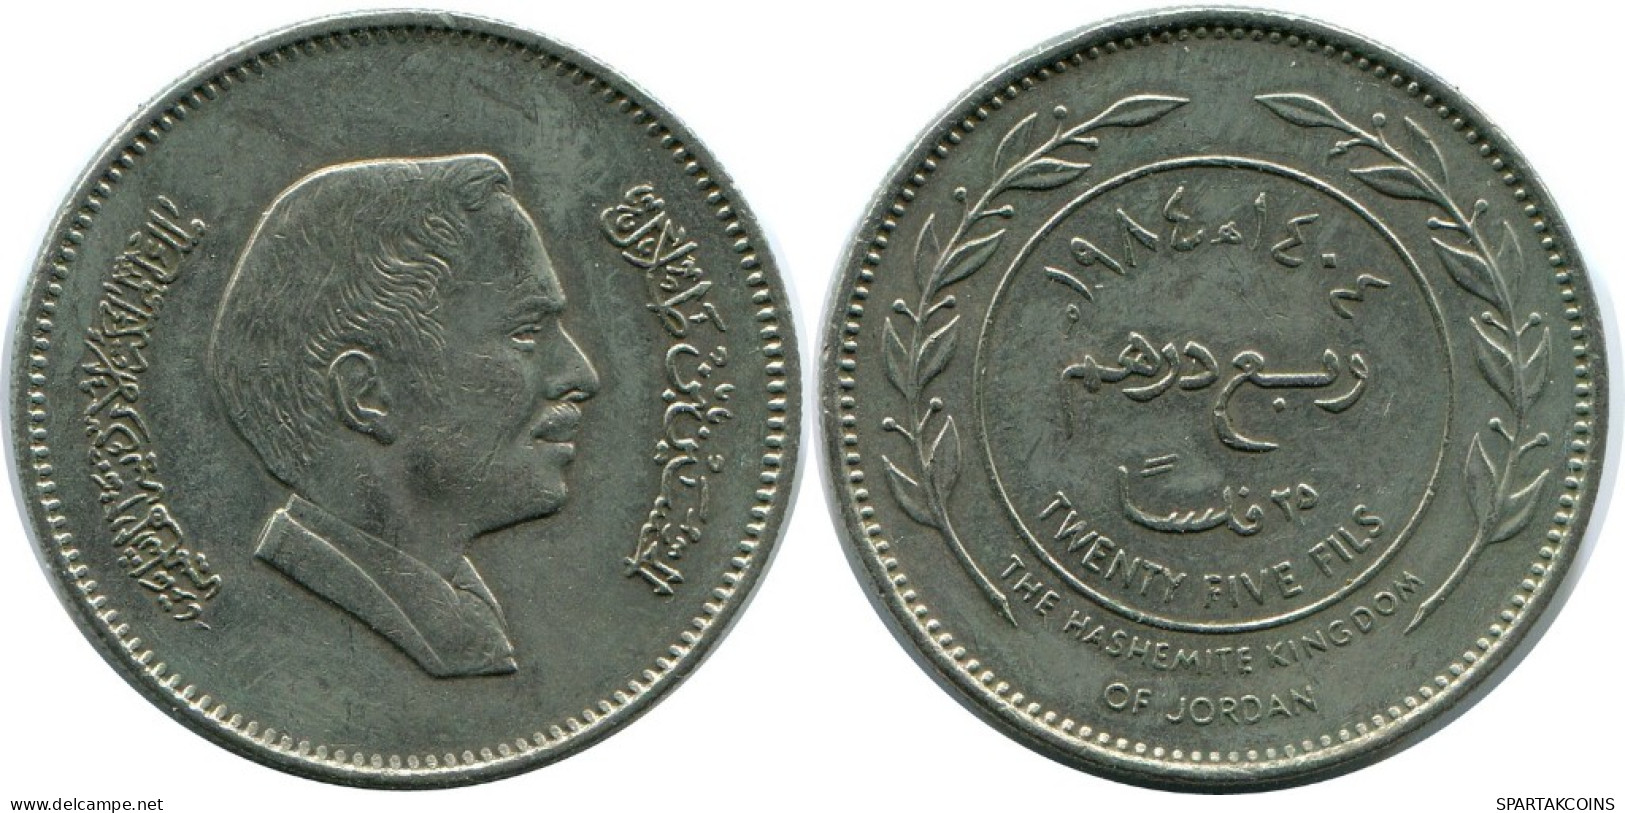 1/4 DIRHAM 25 FILS 1984 JORDAN Islamic Coin #AK157.U.A - Jordanien